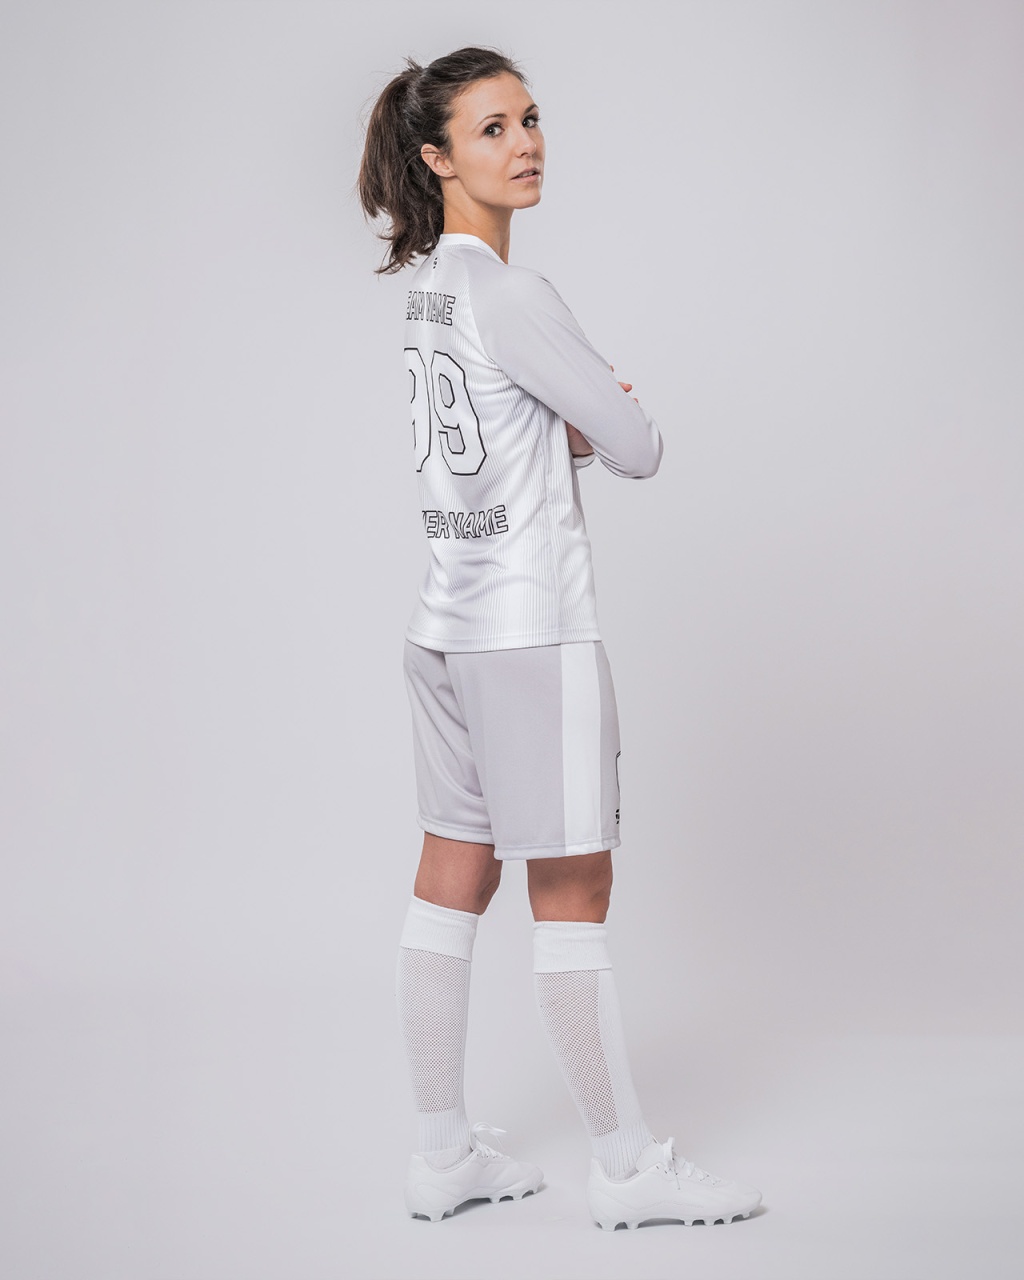 Porto Women’s Goalkeeper Football Jersey